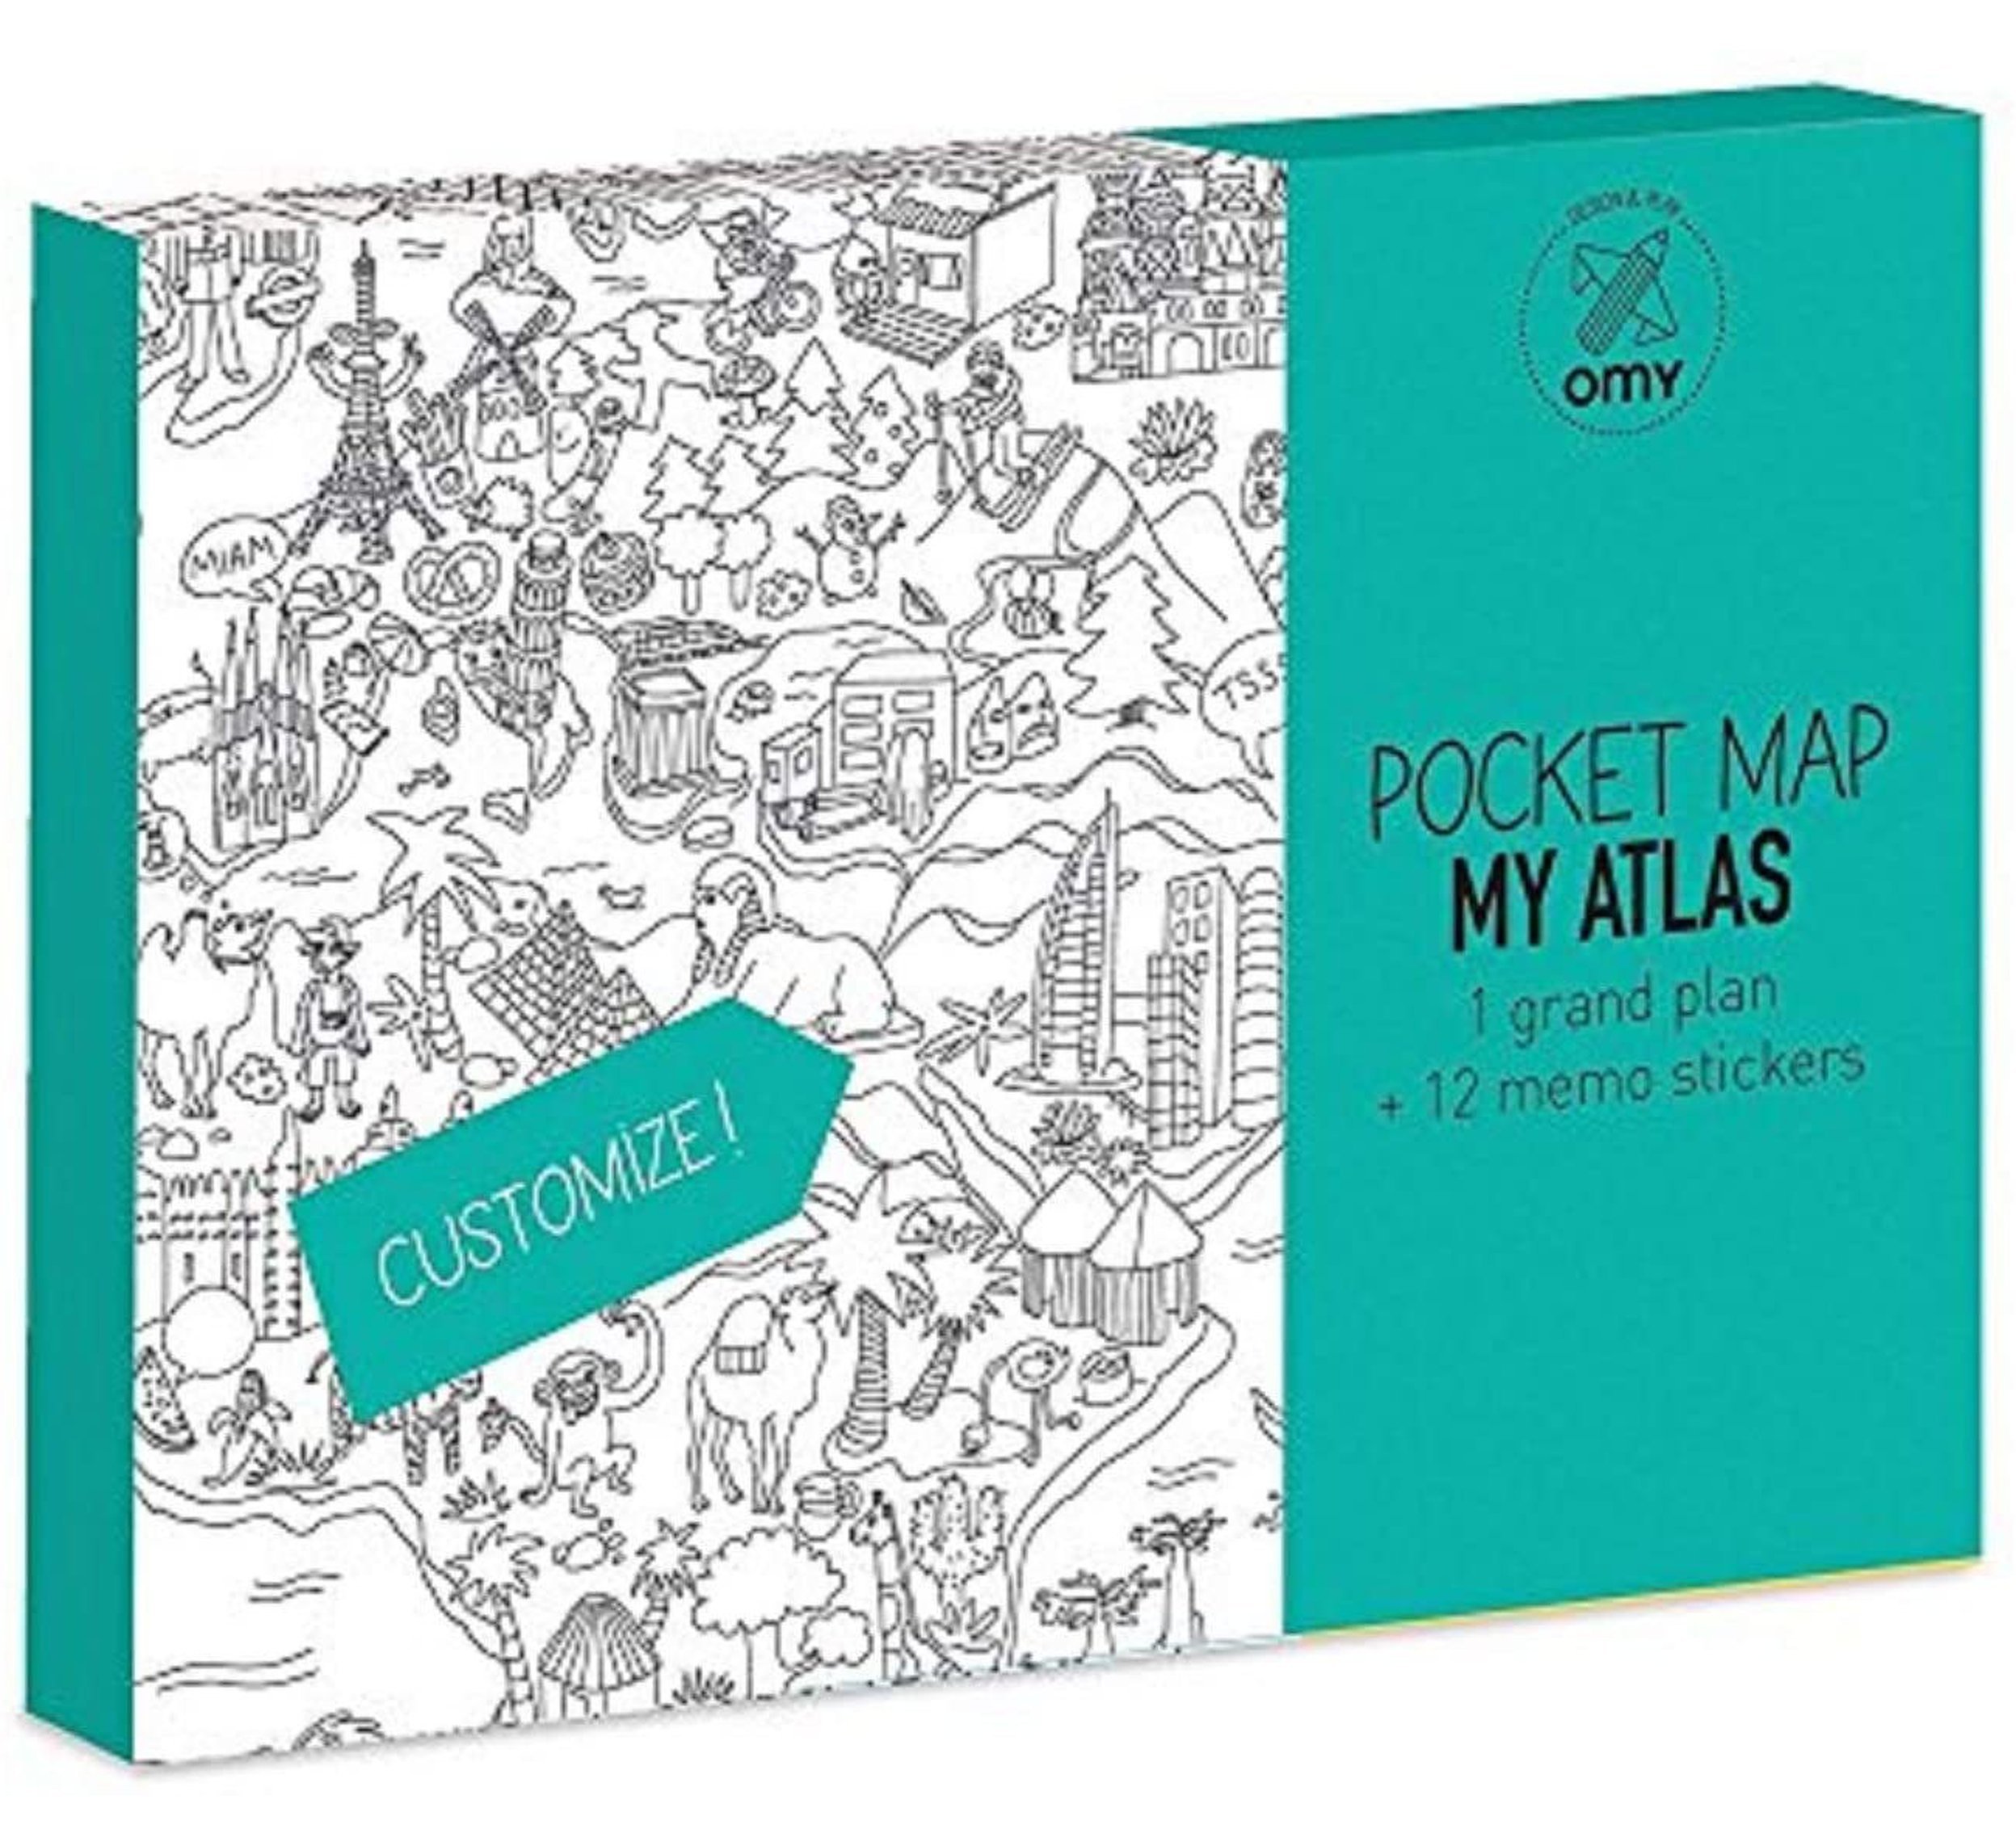 My Atlas Coloring Pocket Maps-Coloring Pocket Maps-OMY-jellyfishkids.com.cy